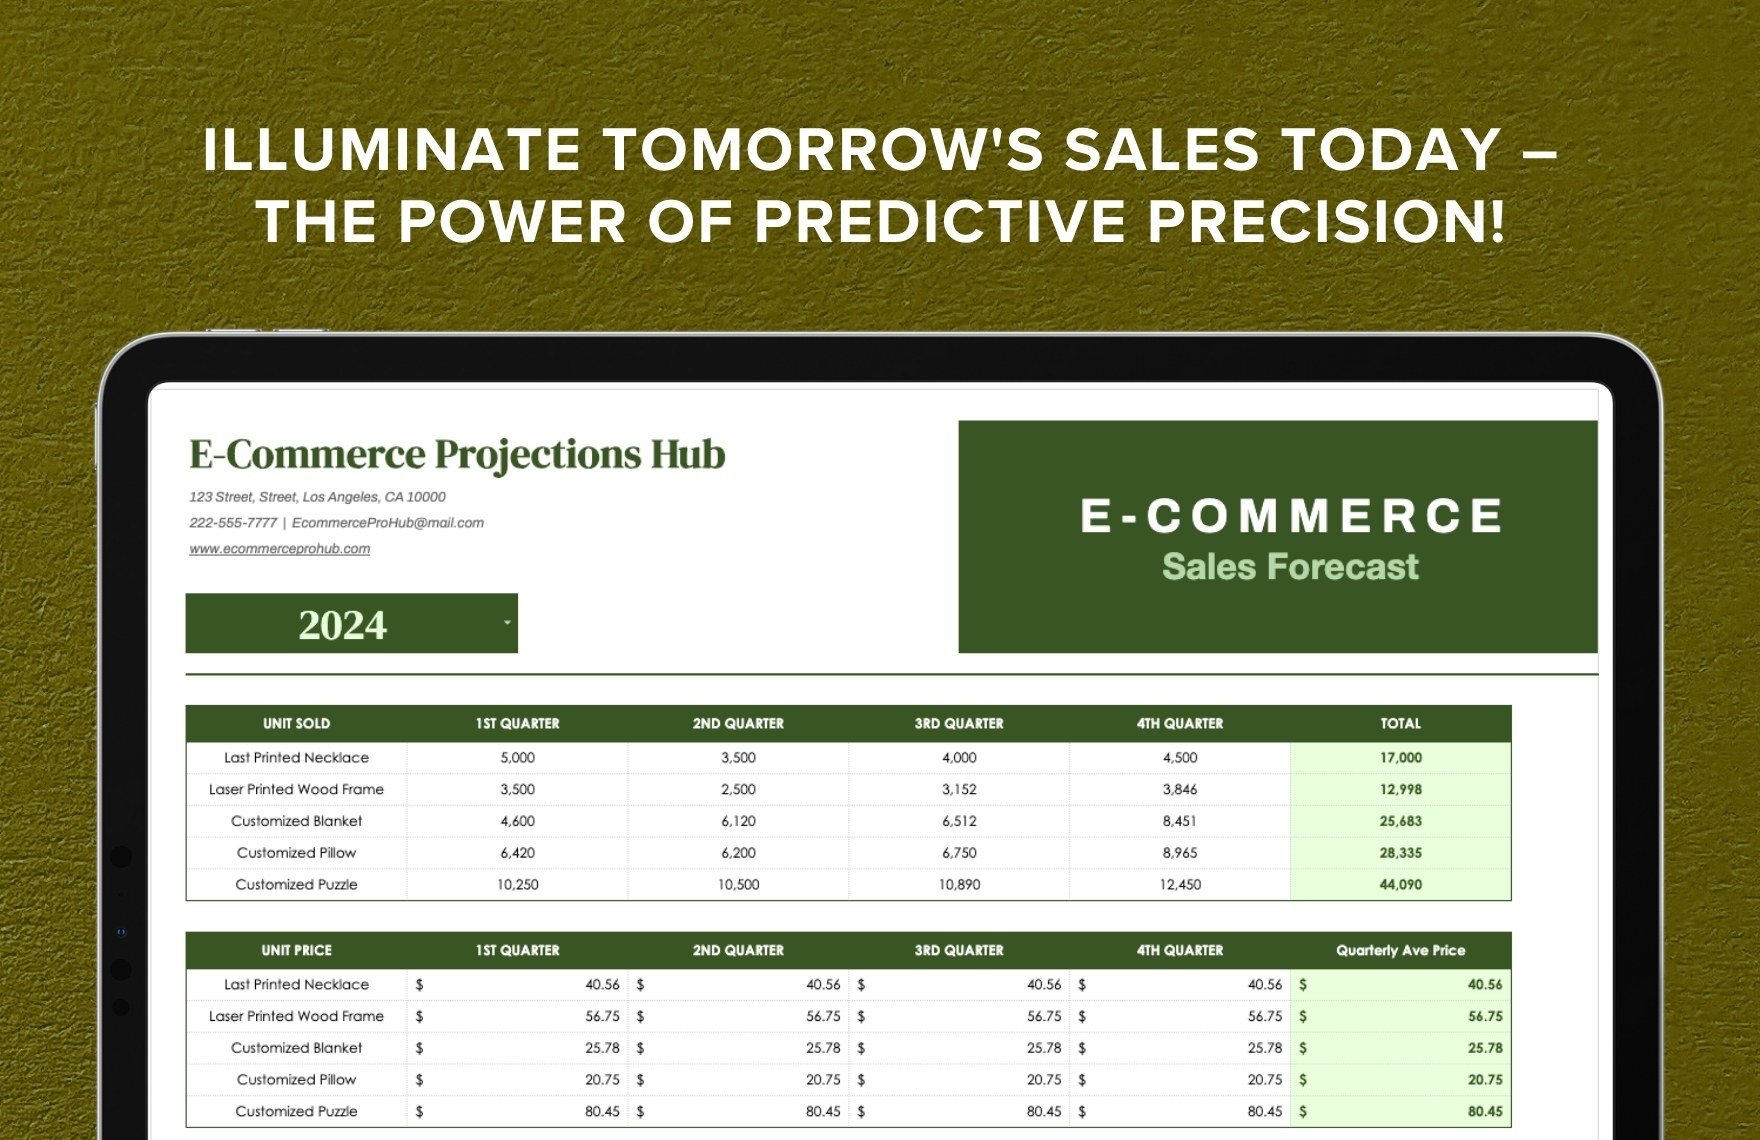 E-commerce Sales Forecast Template